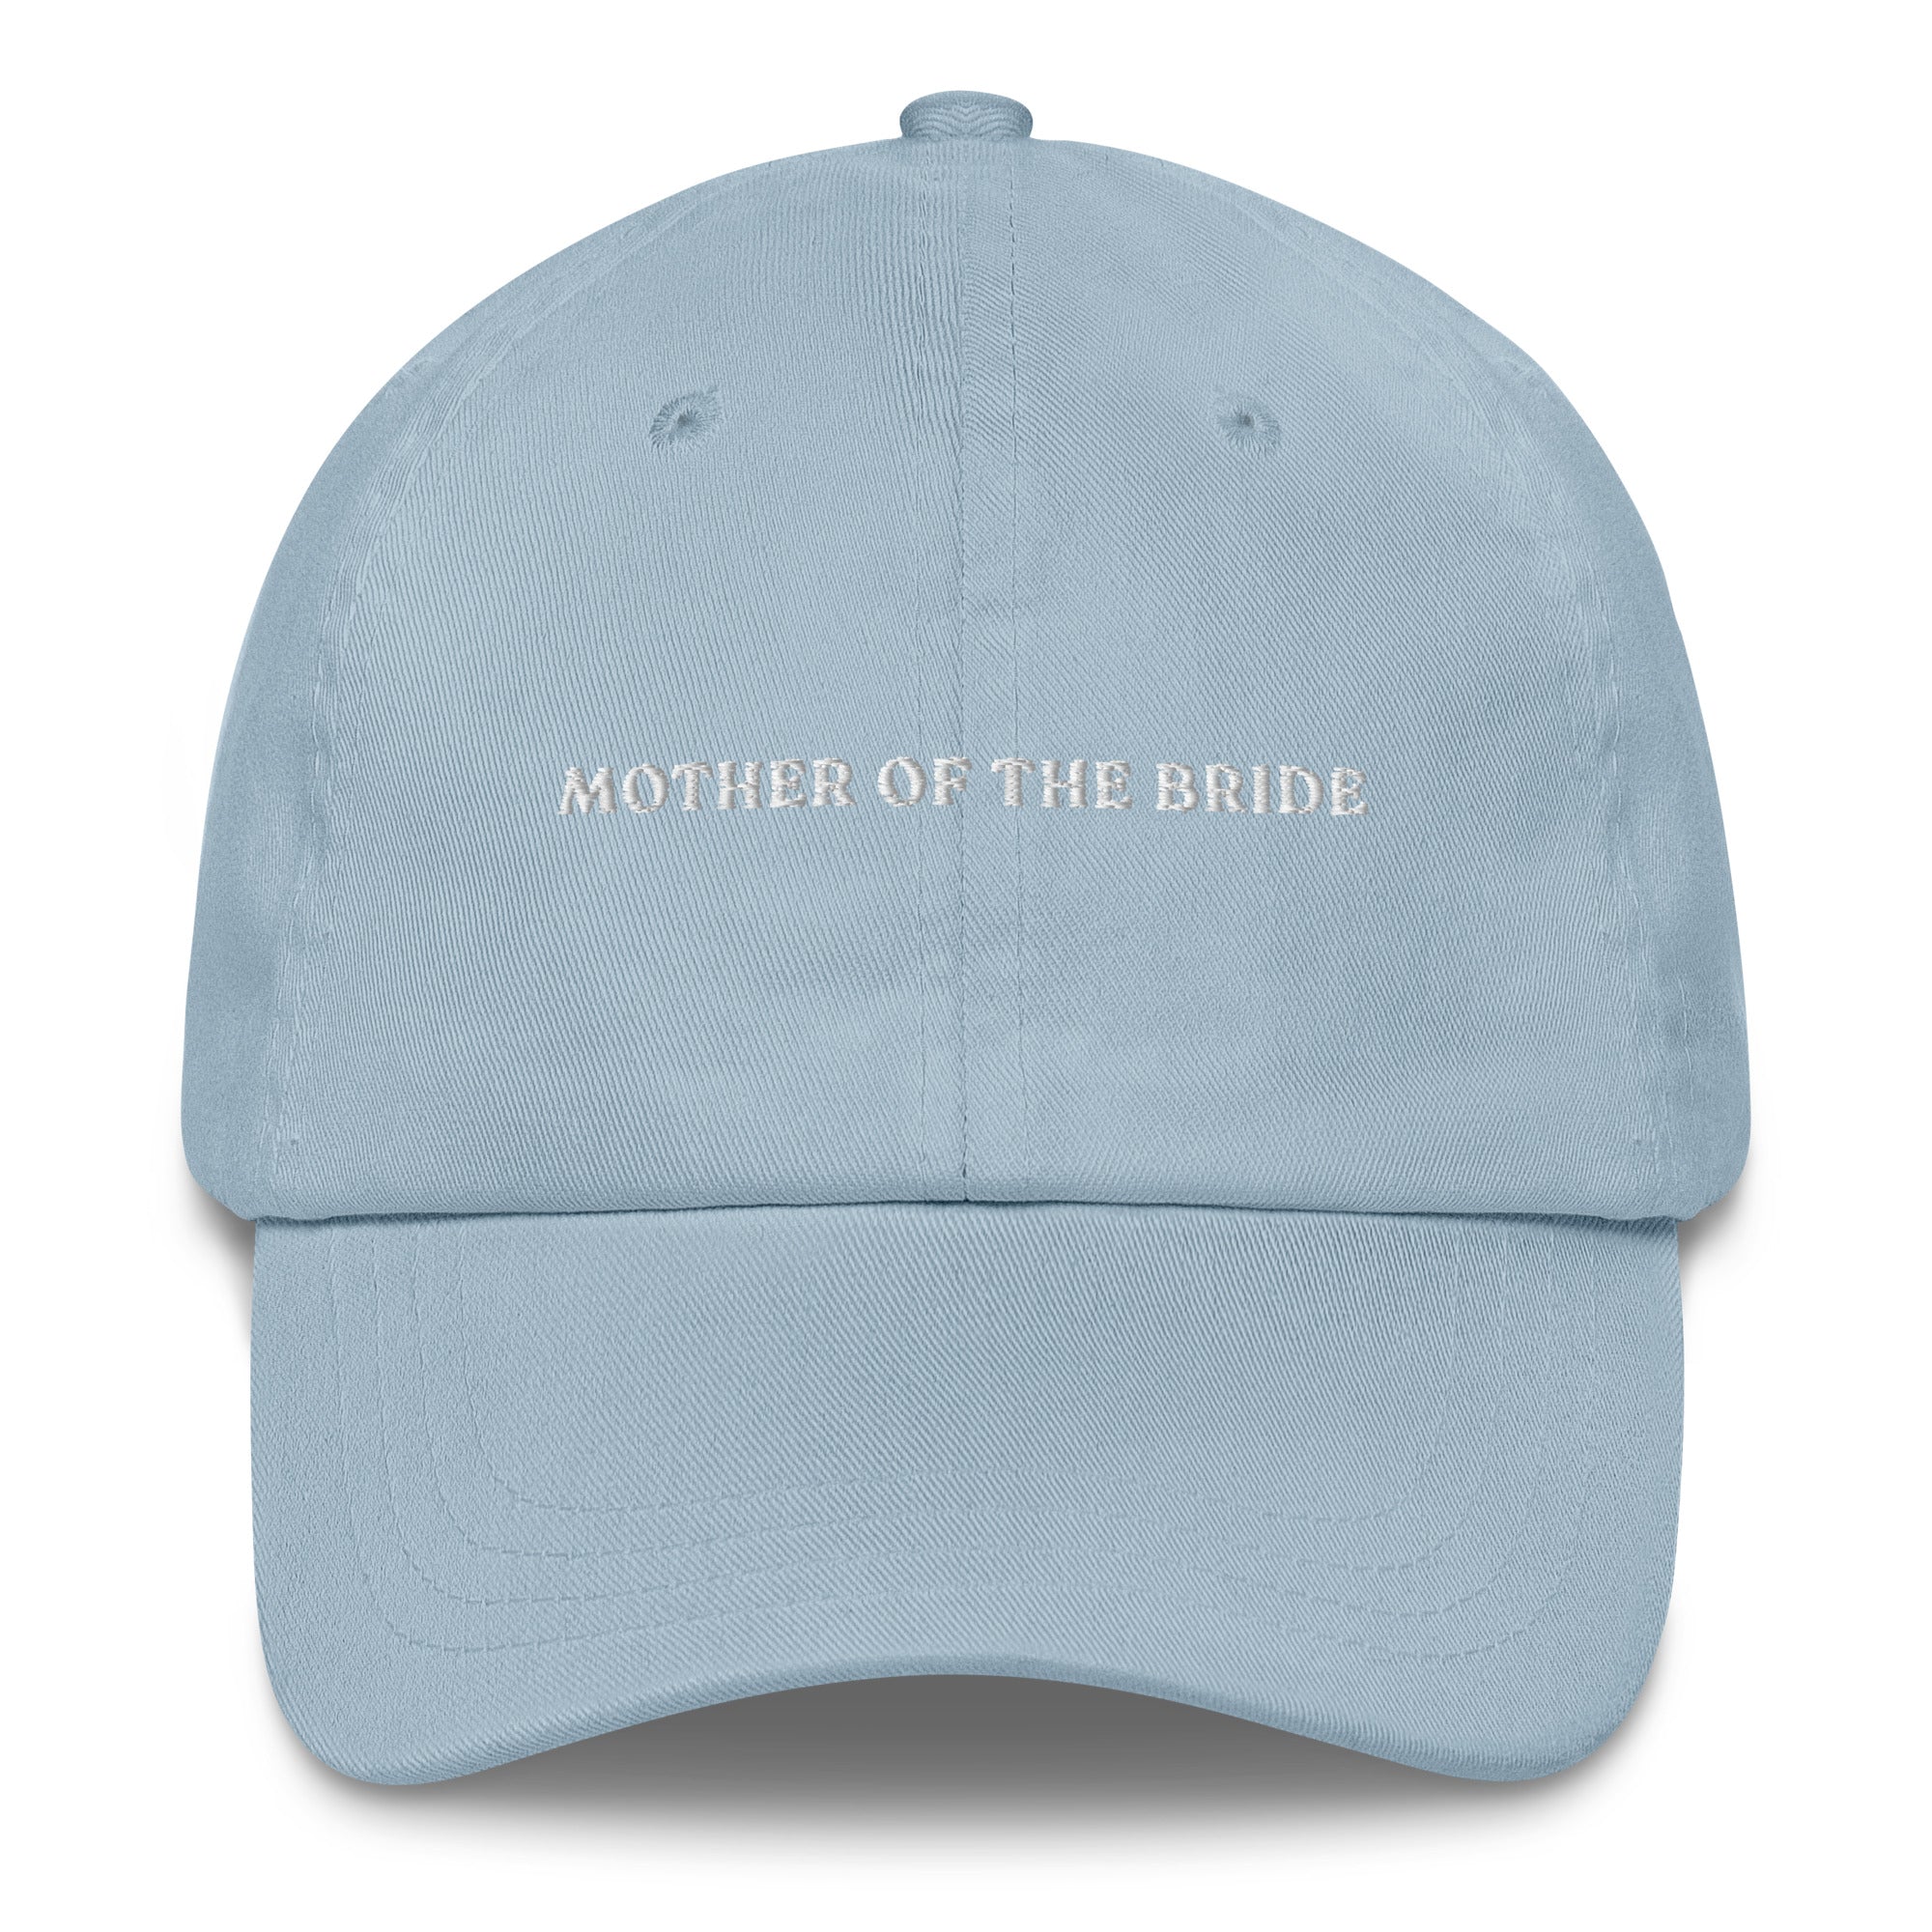 Mother of the bride - Cap